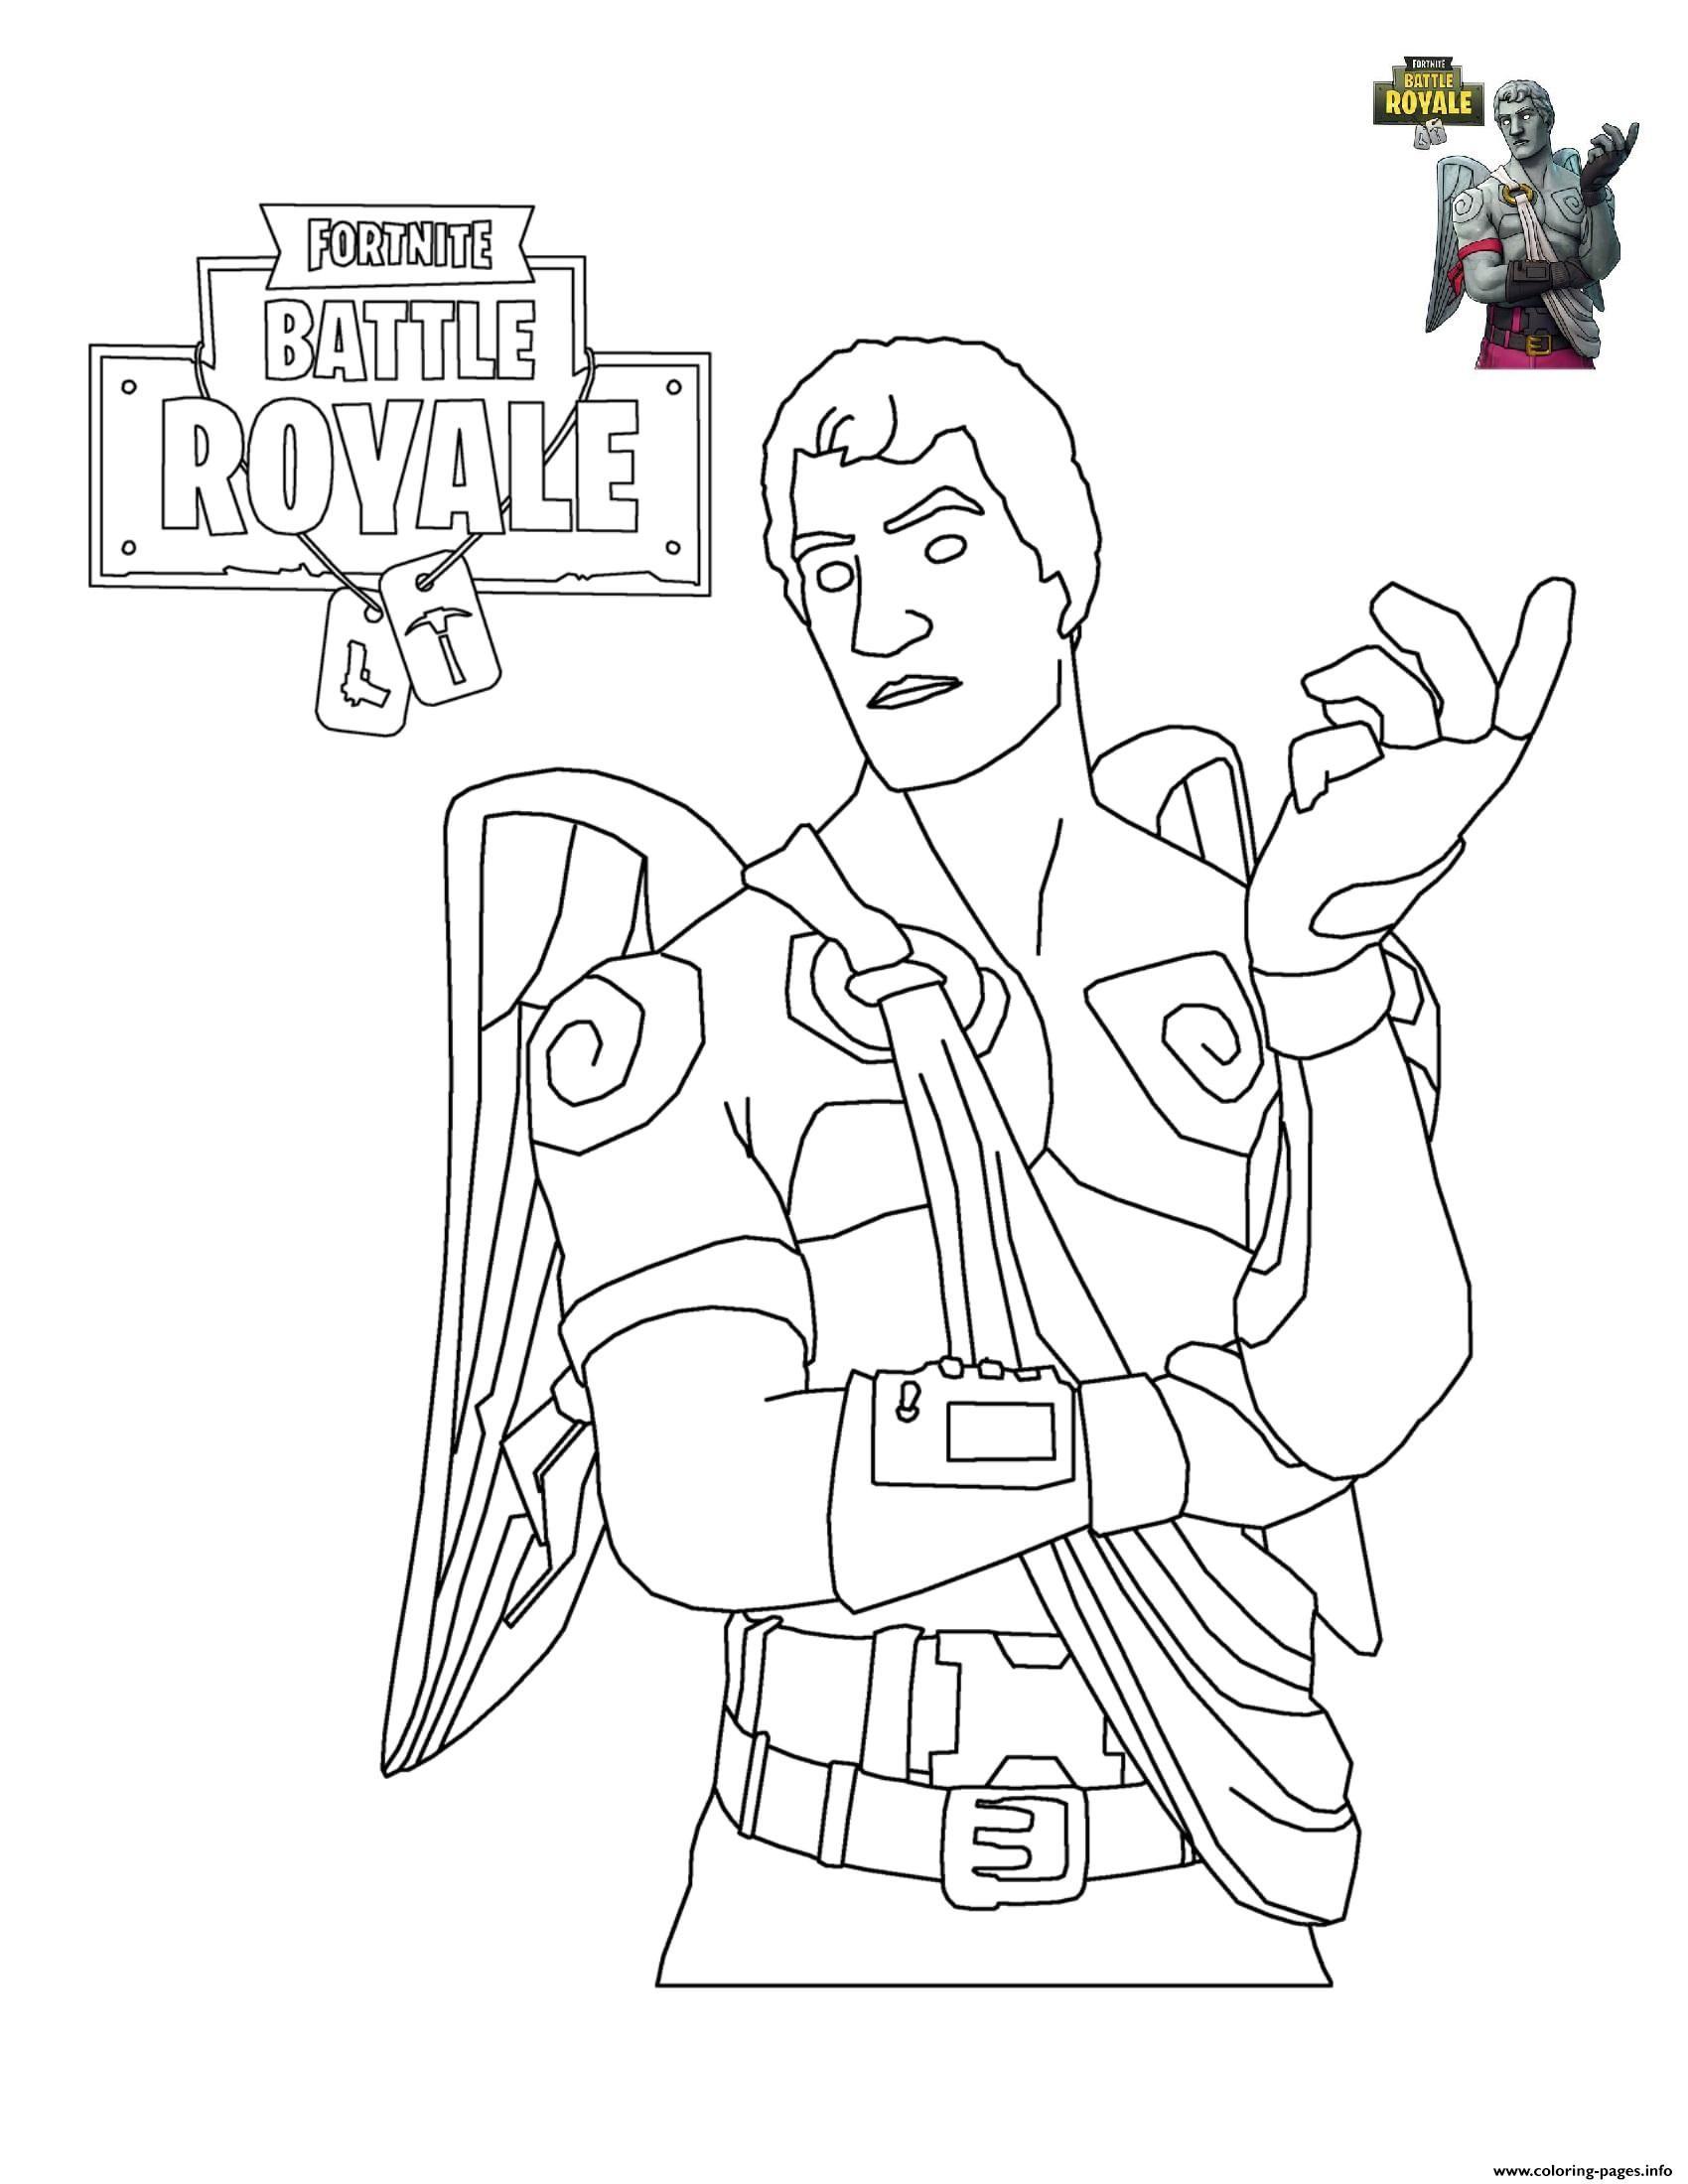 Coloring Fortnite Battle Royale Logo - Fortnite Battle Royale Character 6 Coloring Pages Printable